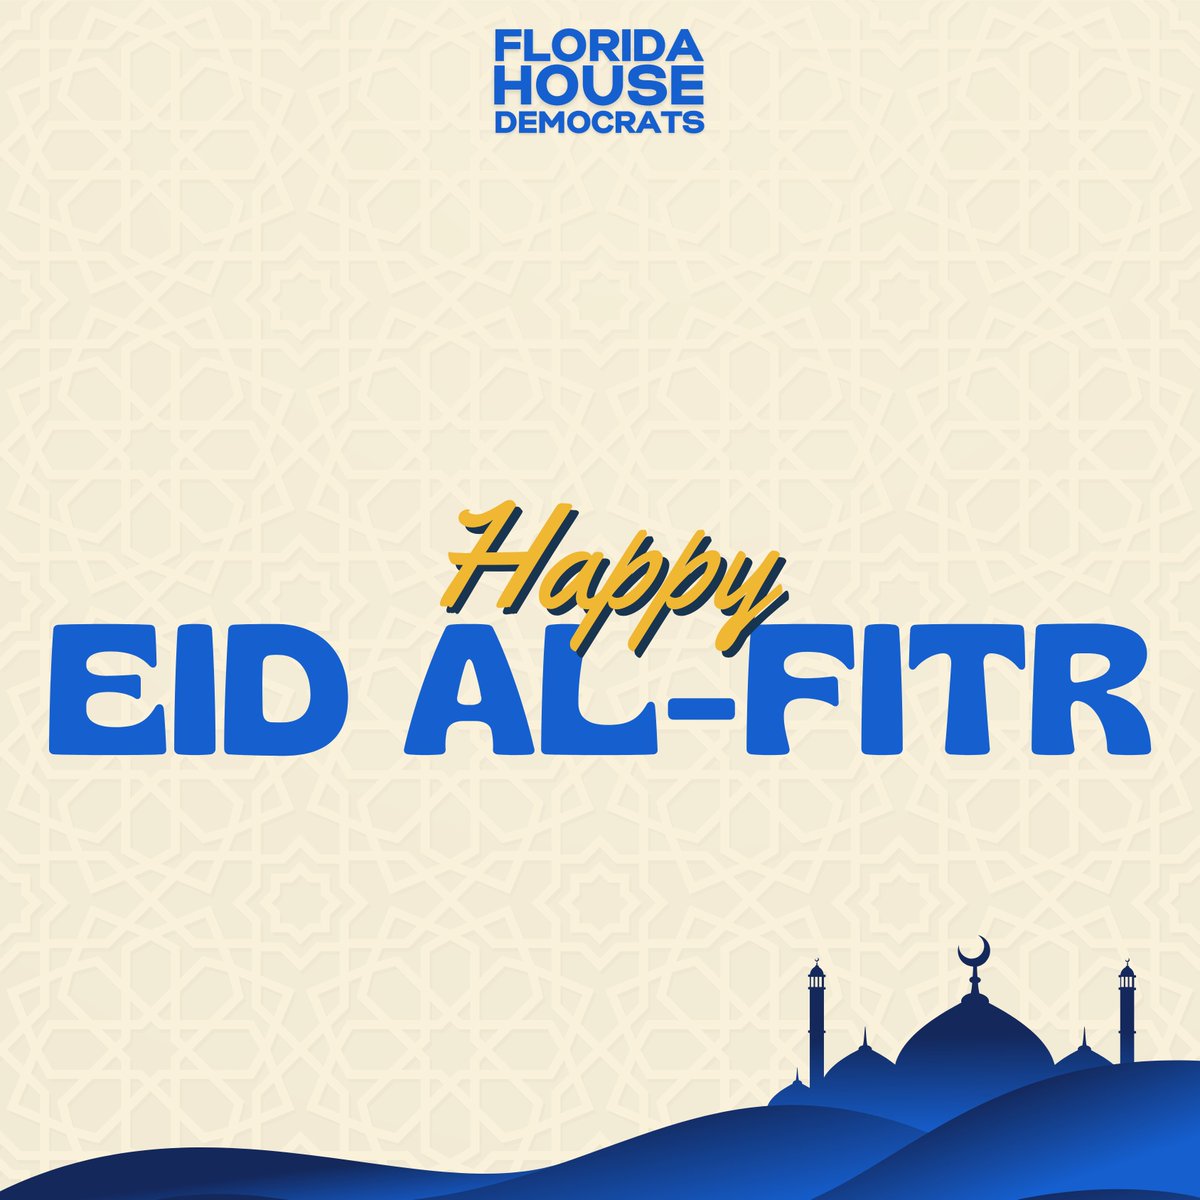 Wishing everyone a happy and peaceful Eid Al-Fitr.